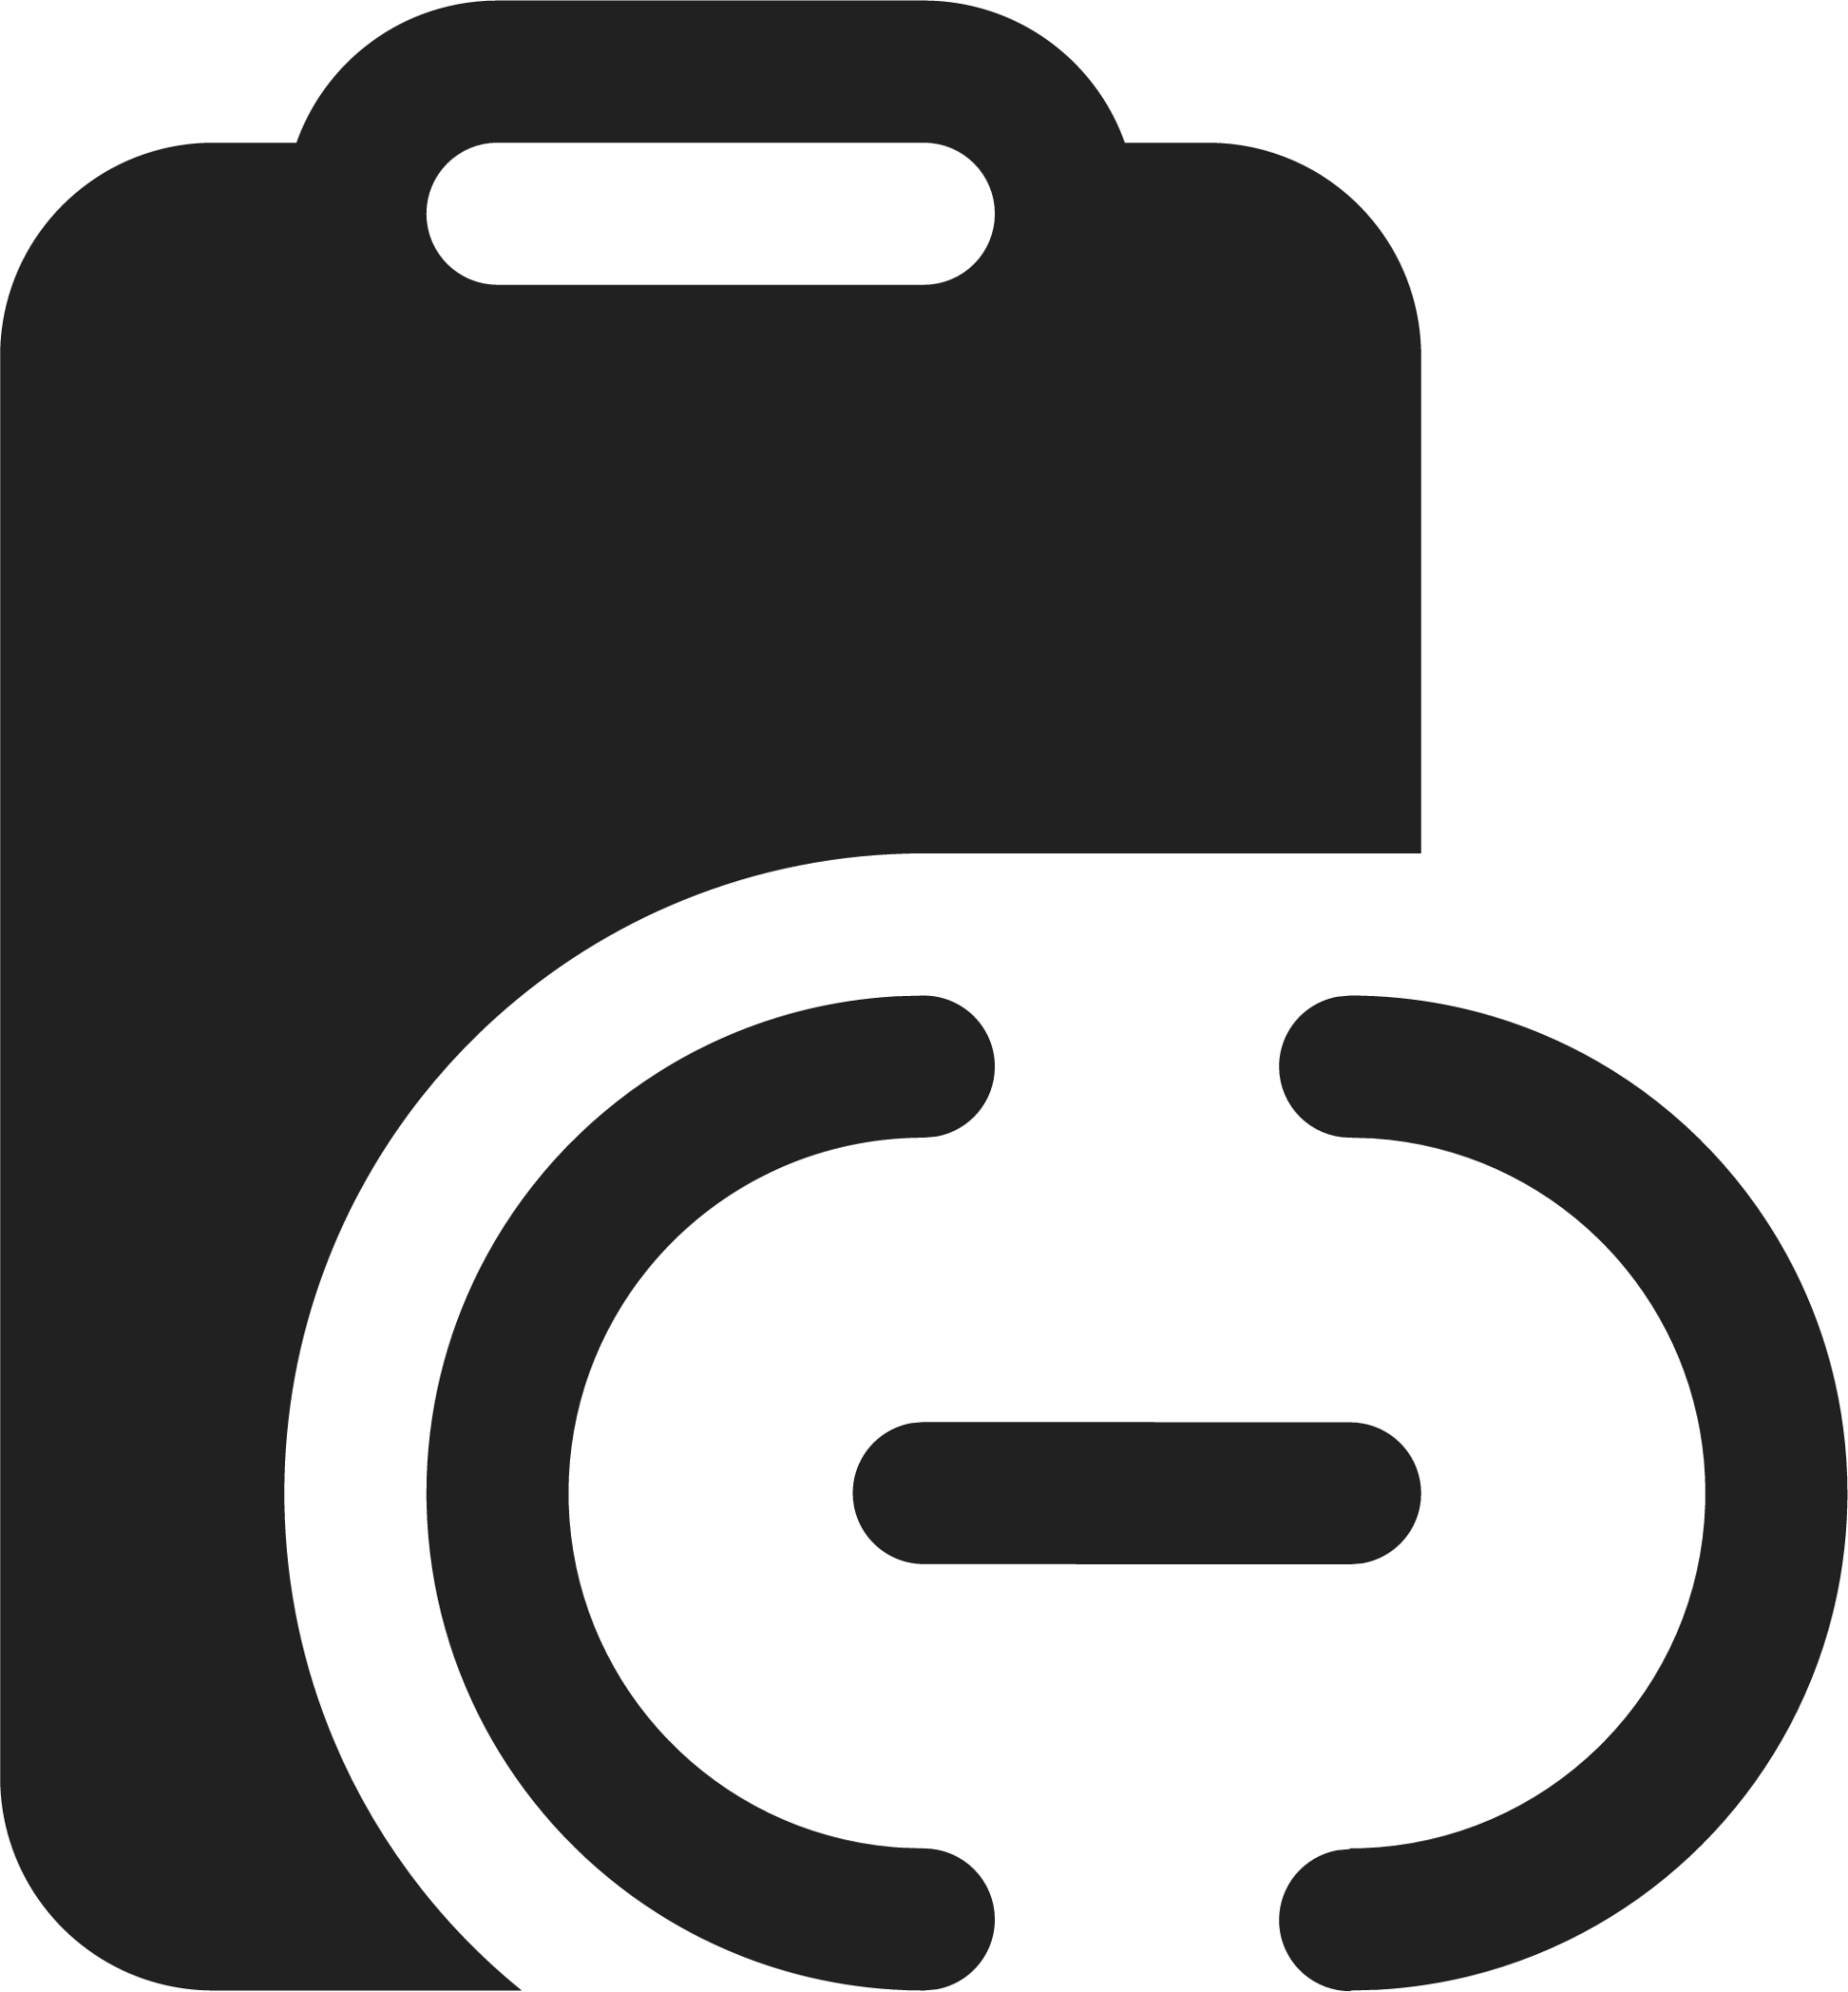 Clipboard Link icon